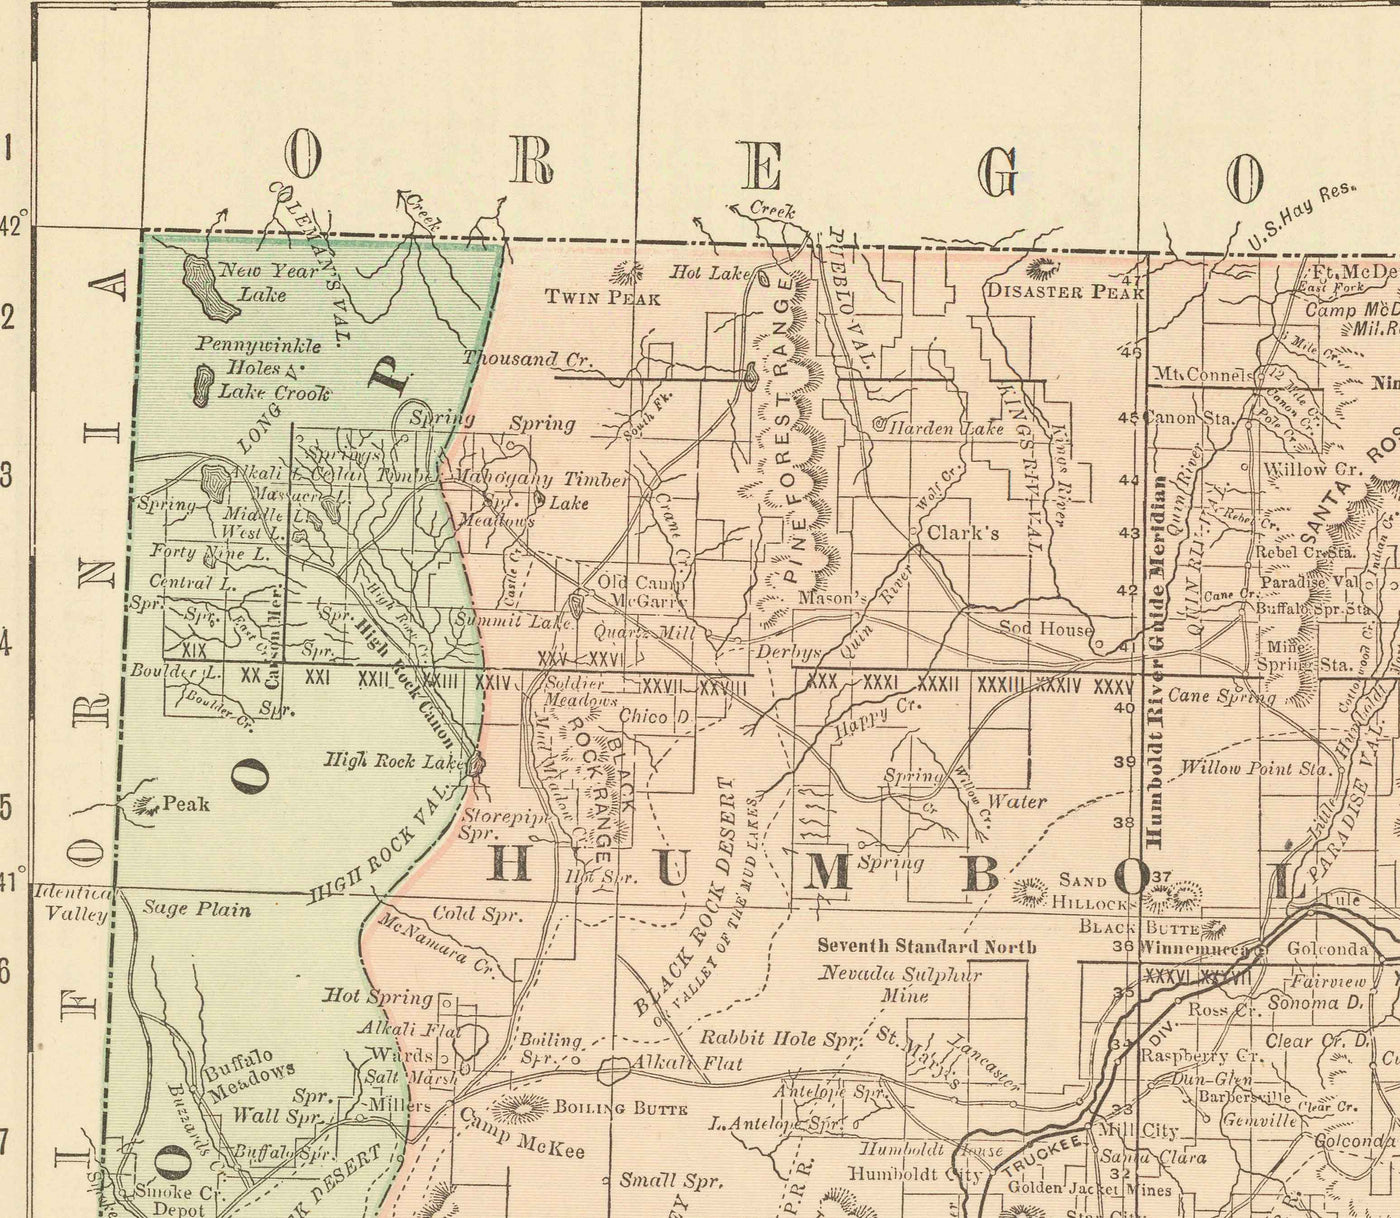 Old Map of Nevada, USA, 1882 by Rand & McNally - Las Vegas, Reno, Counties, Carson City